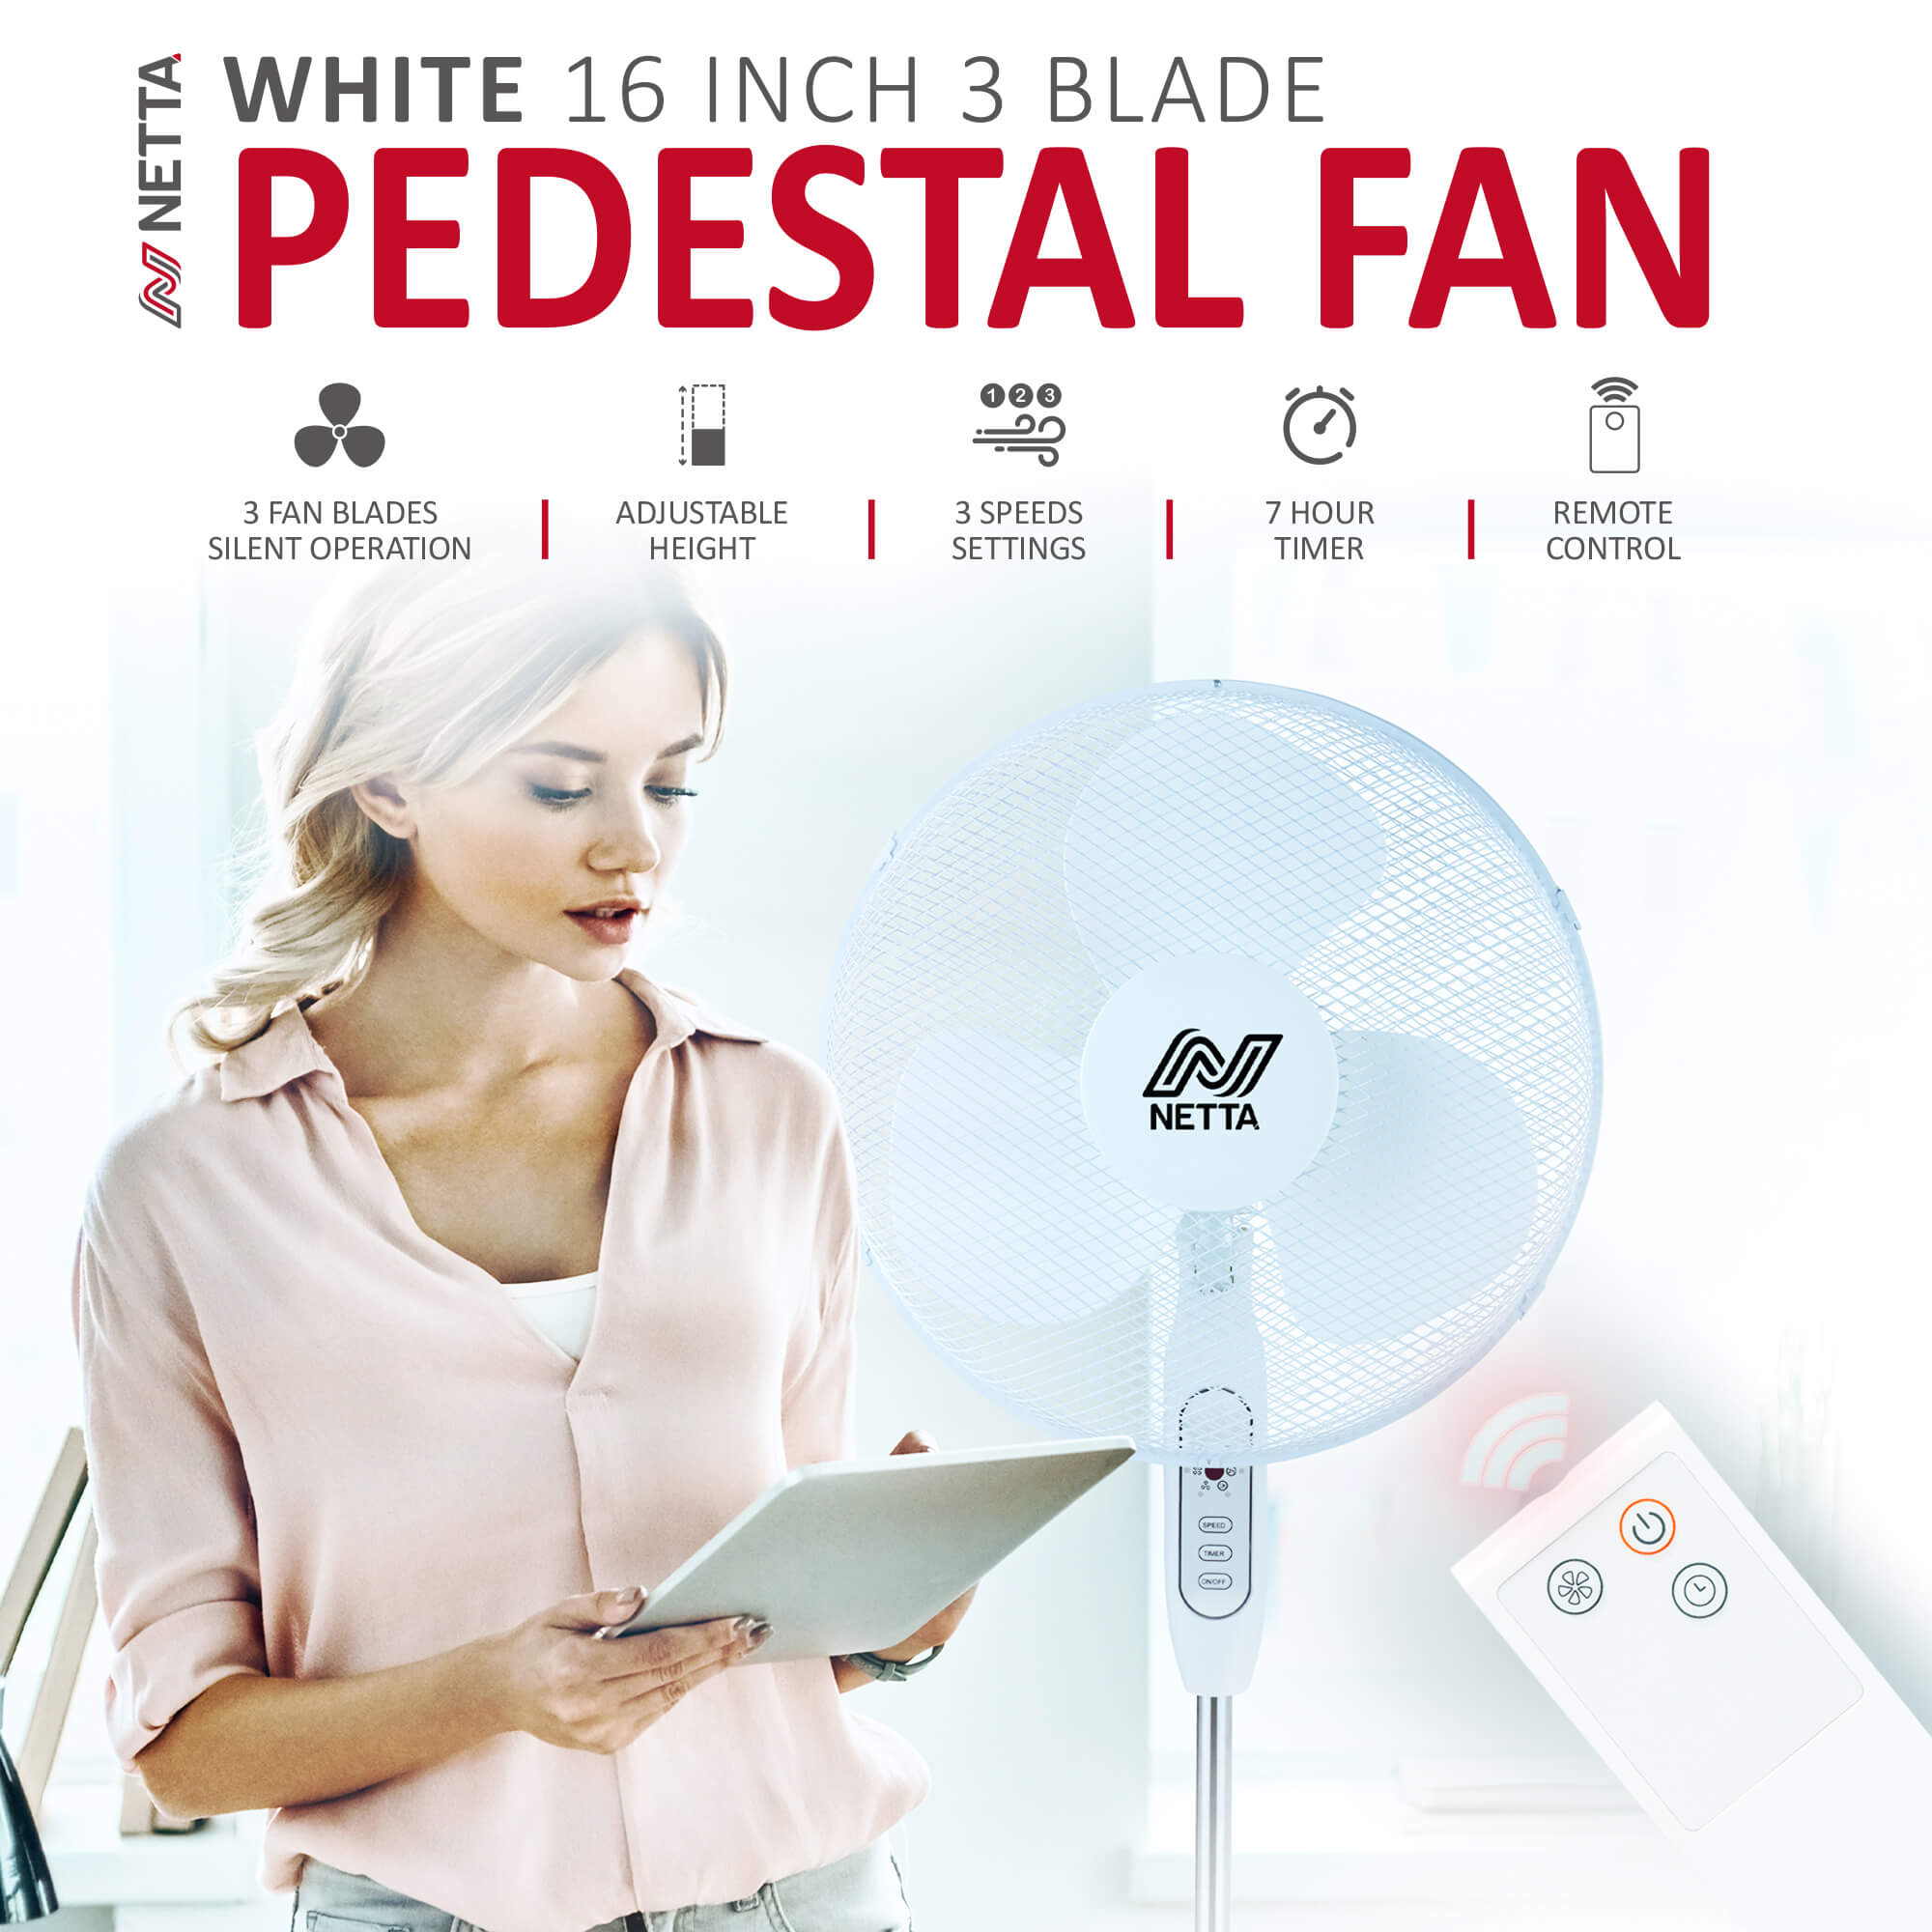 NETTA 16 Inch Pedestal Fan With Remote Control - White